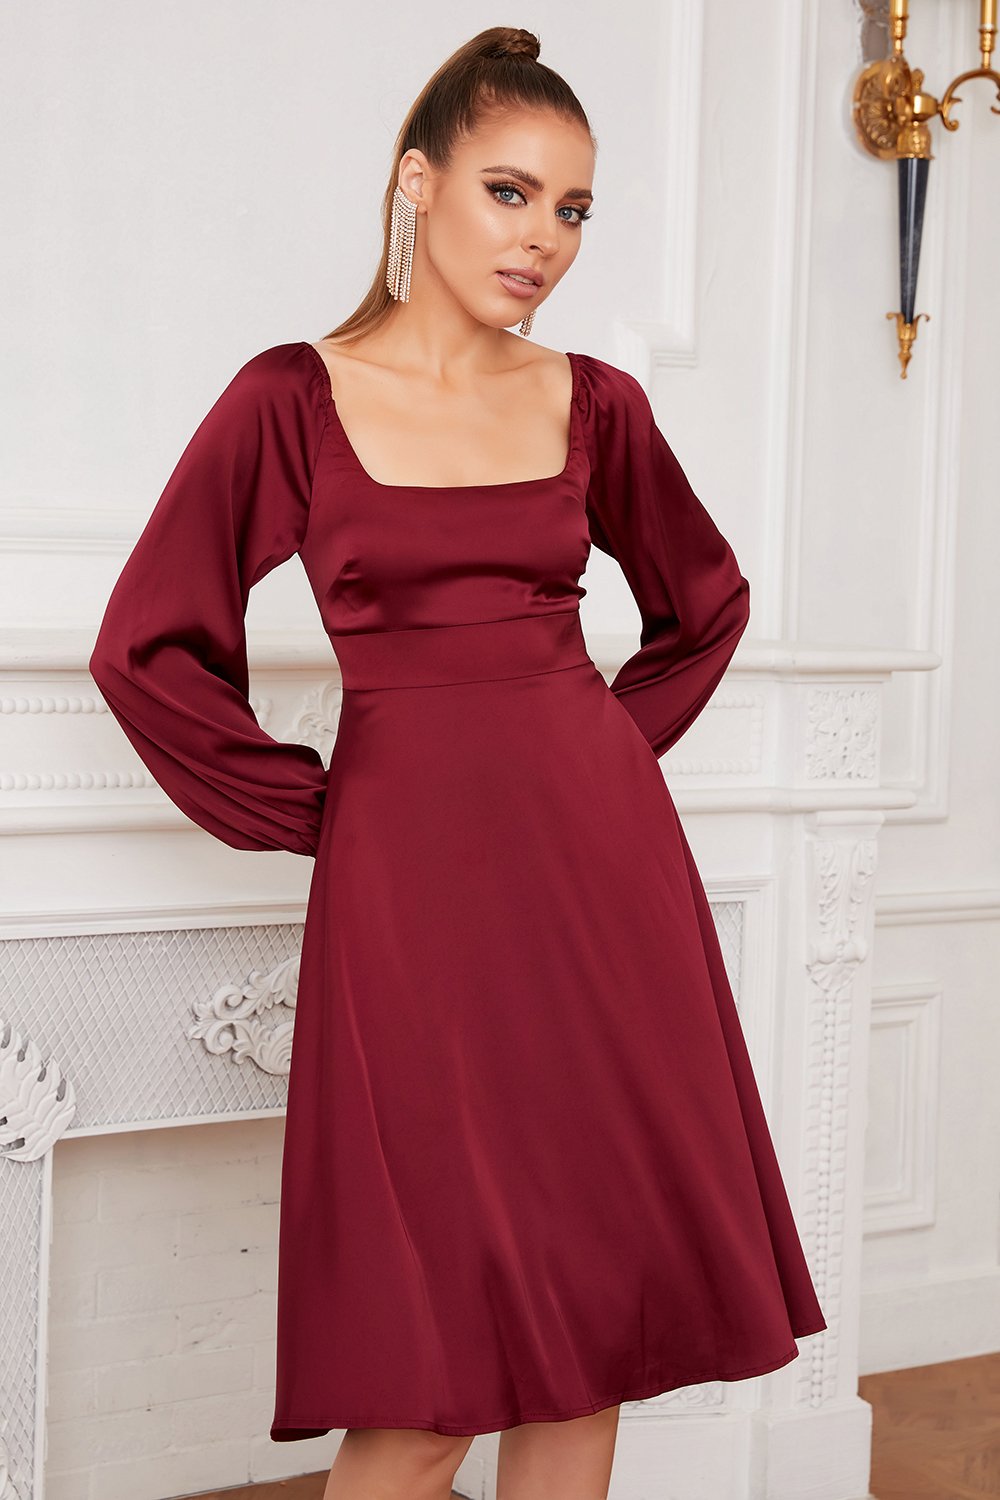 Burgundy Long Sleeves Formal Party Dress